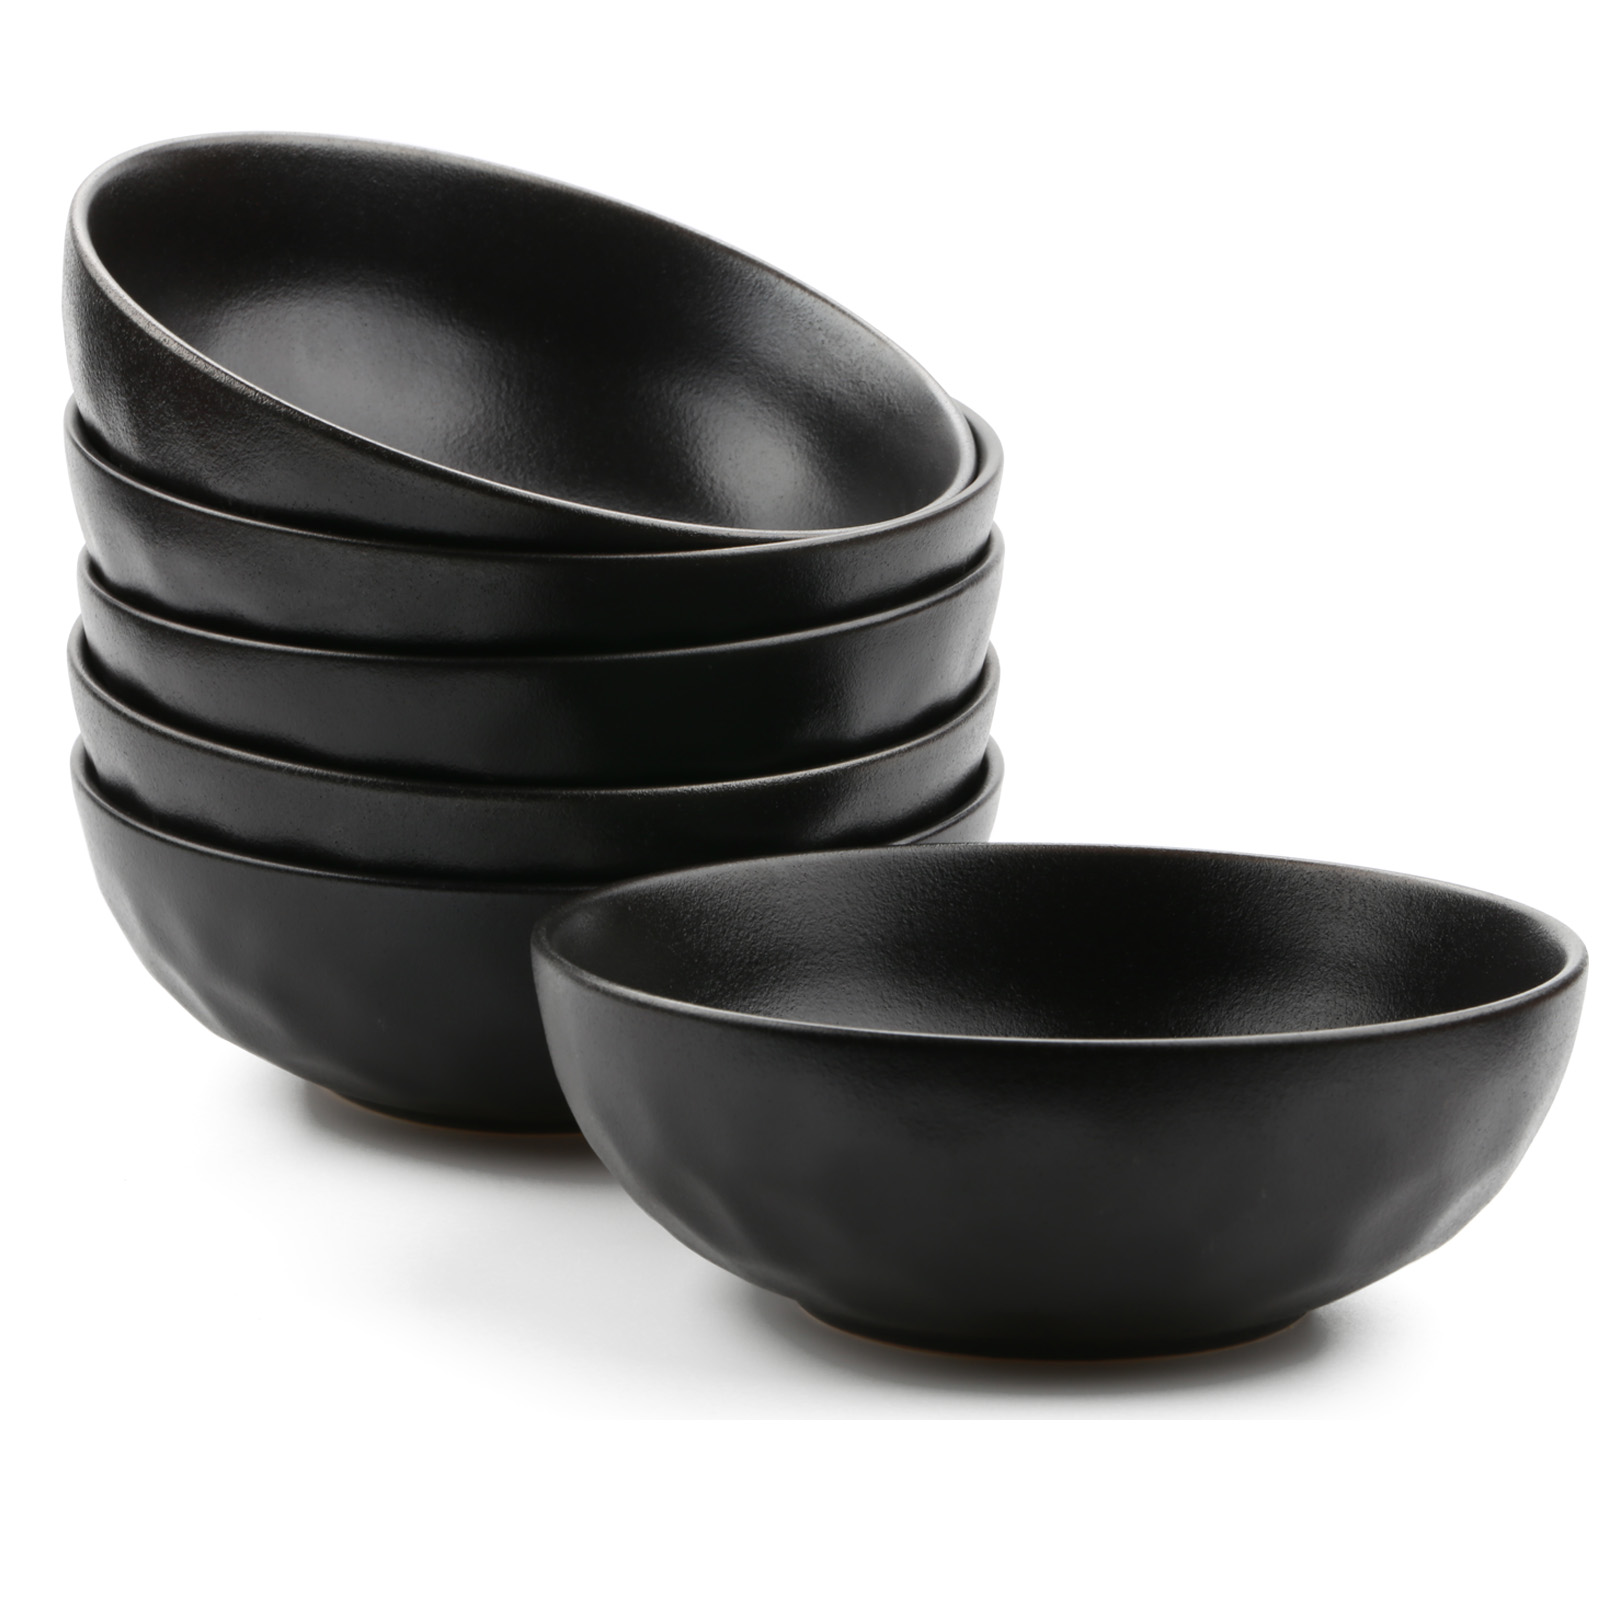 American Atelier Fluted Cereal Bowls | Set of 4 | Stoneware Soup Bowls Set for Kitchen | 22-Ounce Pasta, Ramen, Salad Bowl Set | Reusable, Microwave